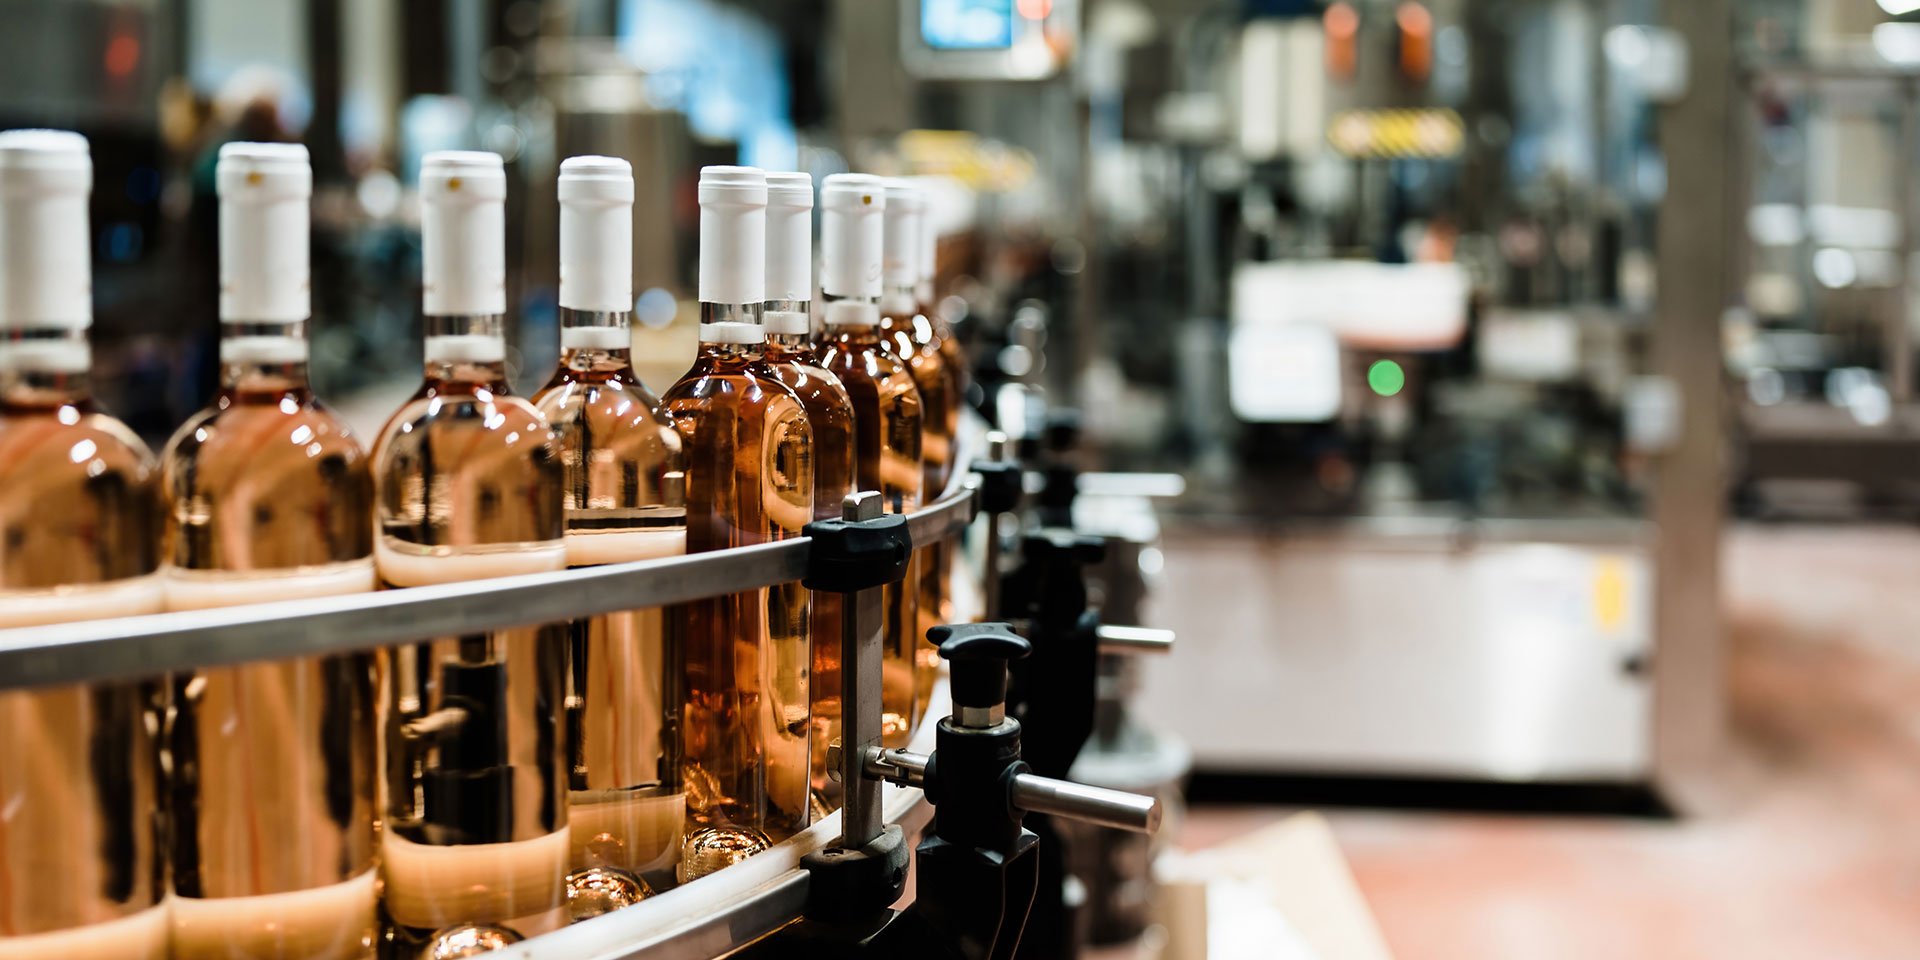 wine bottles being processed